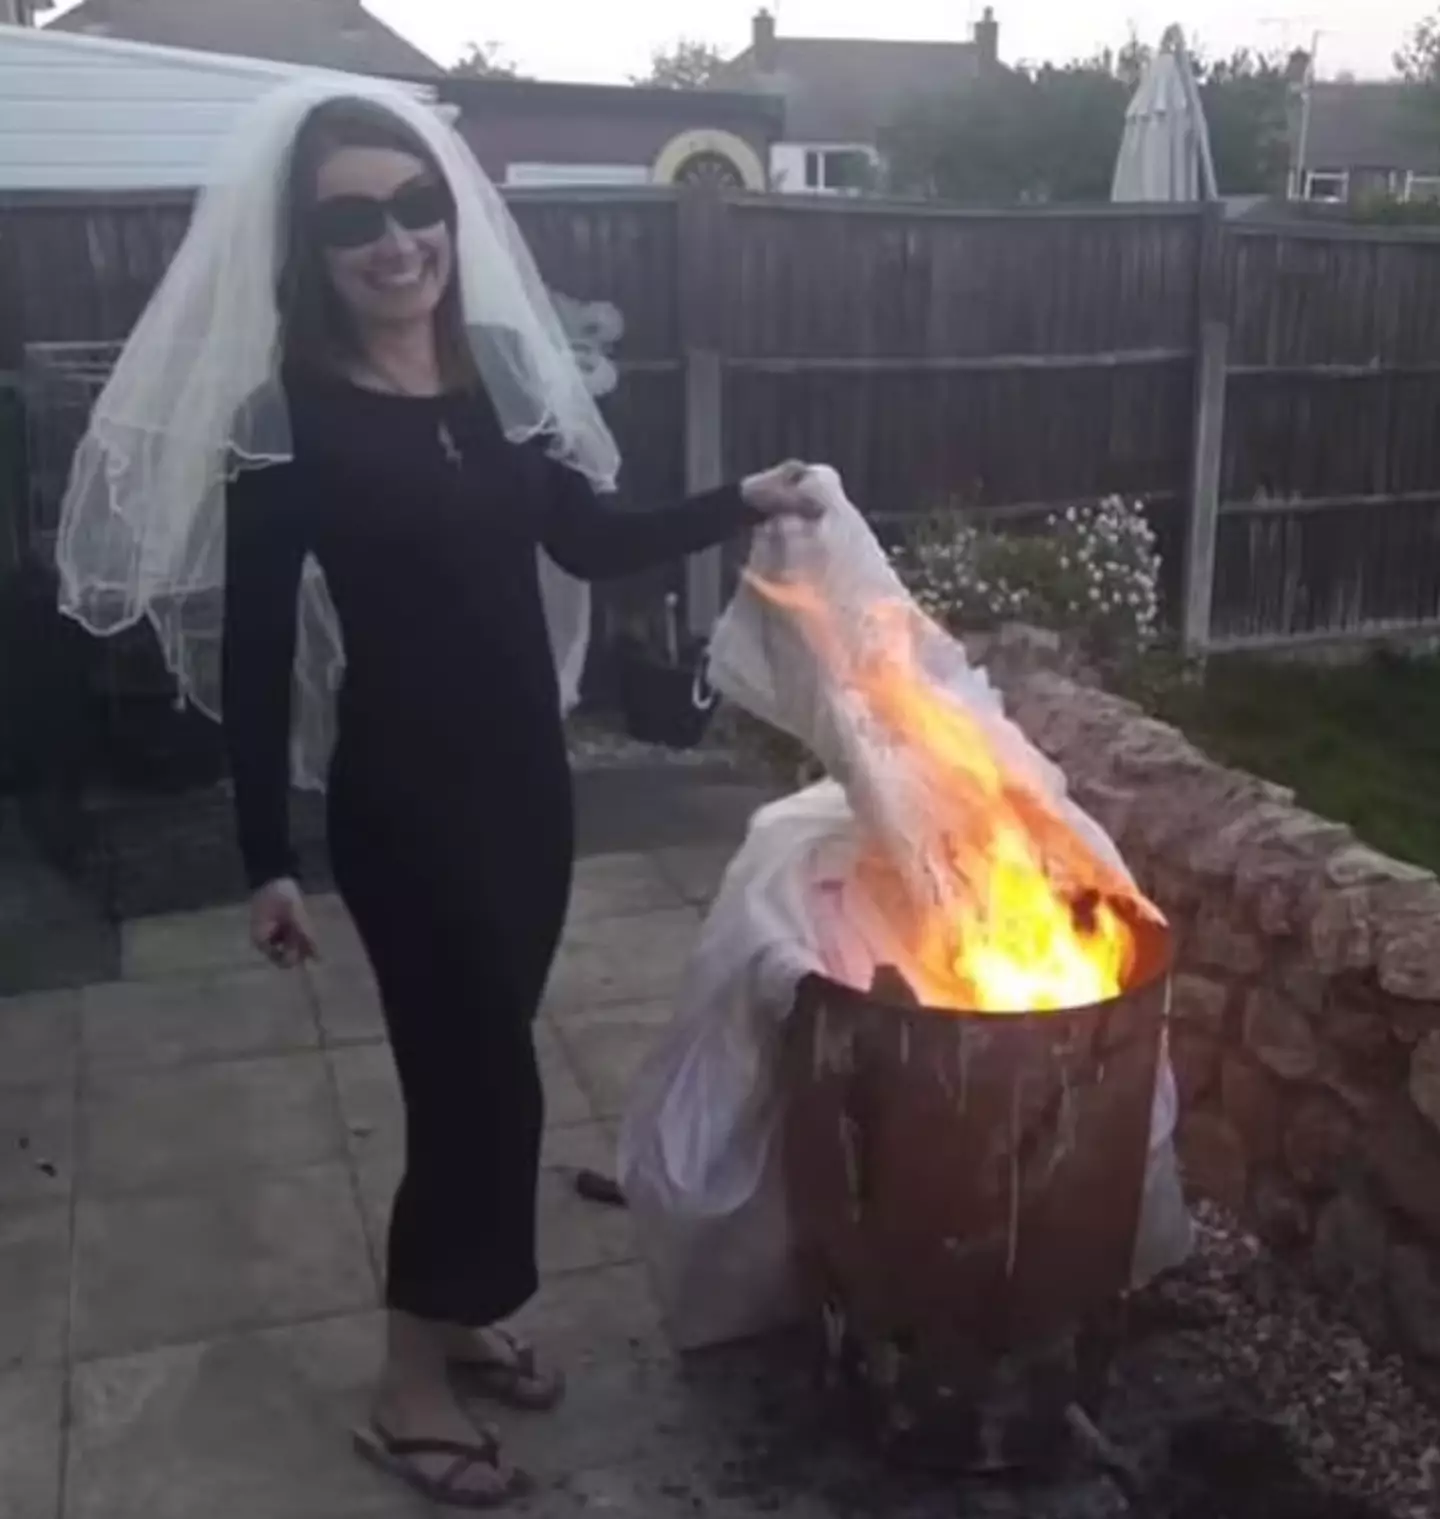 Emma said that burning her wedding dress helped her heal after her divorce.